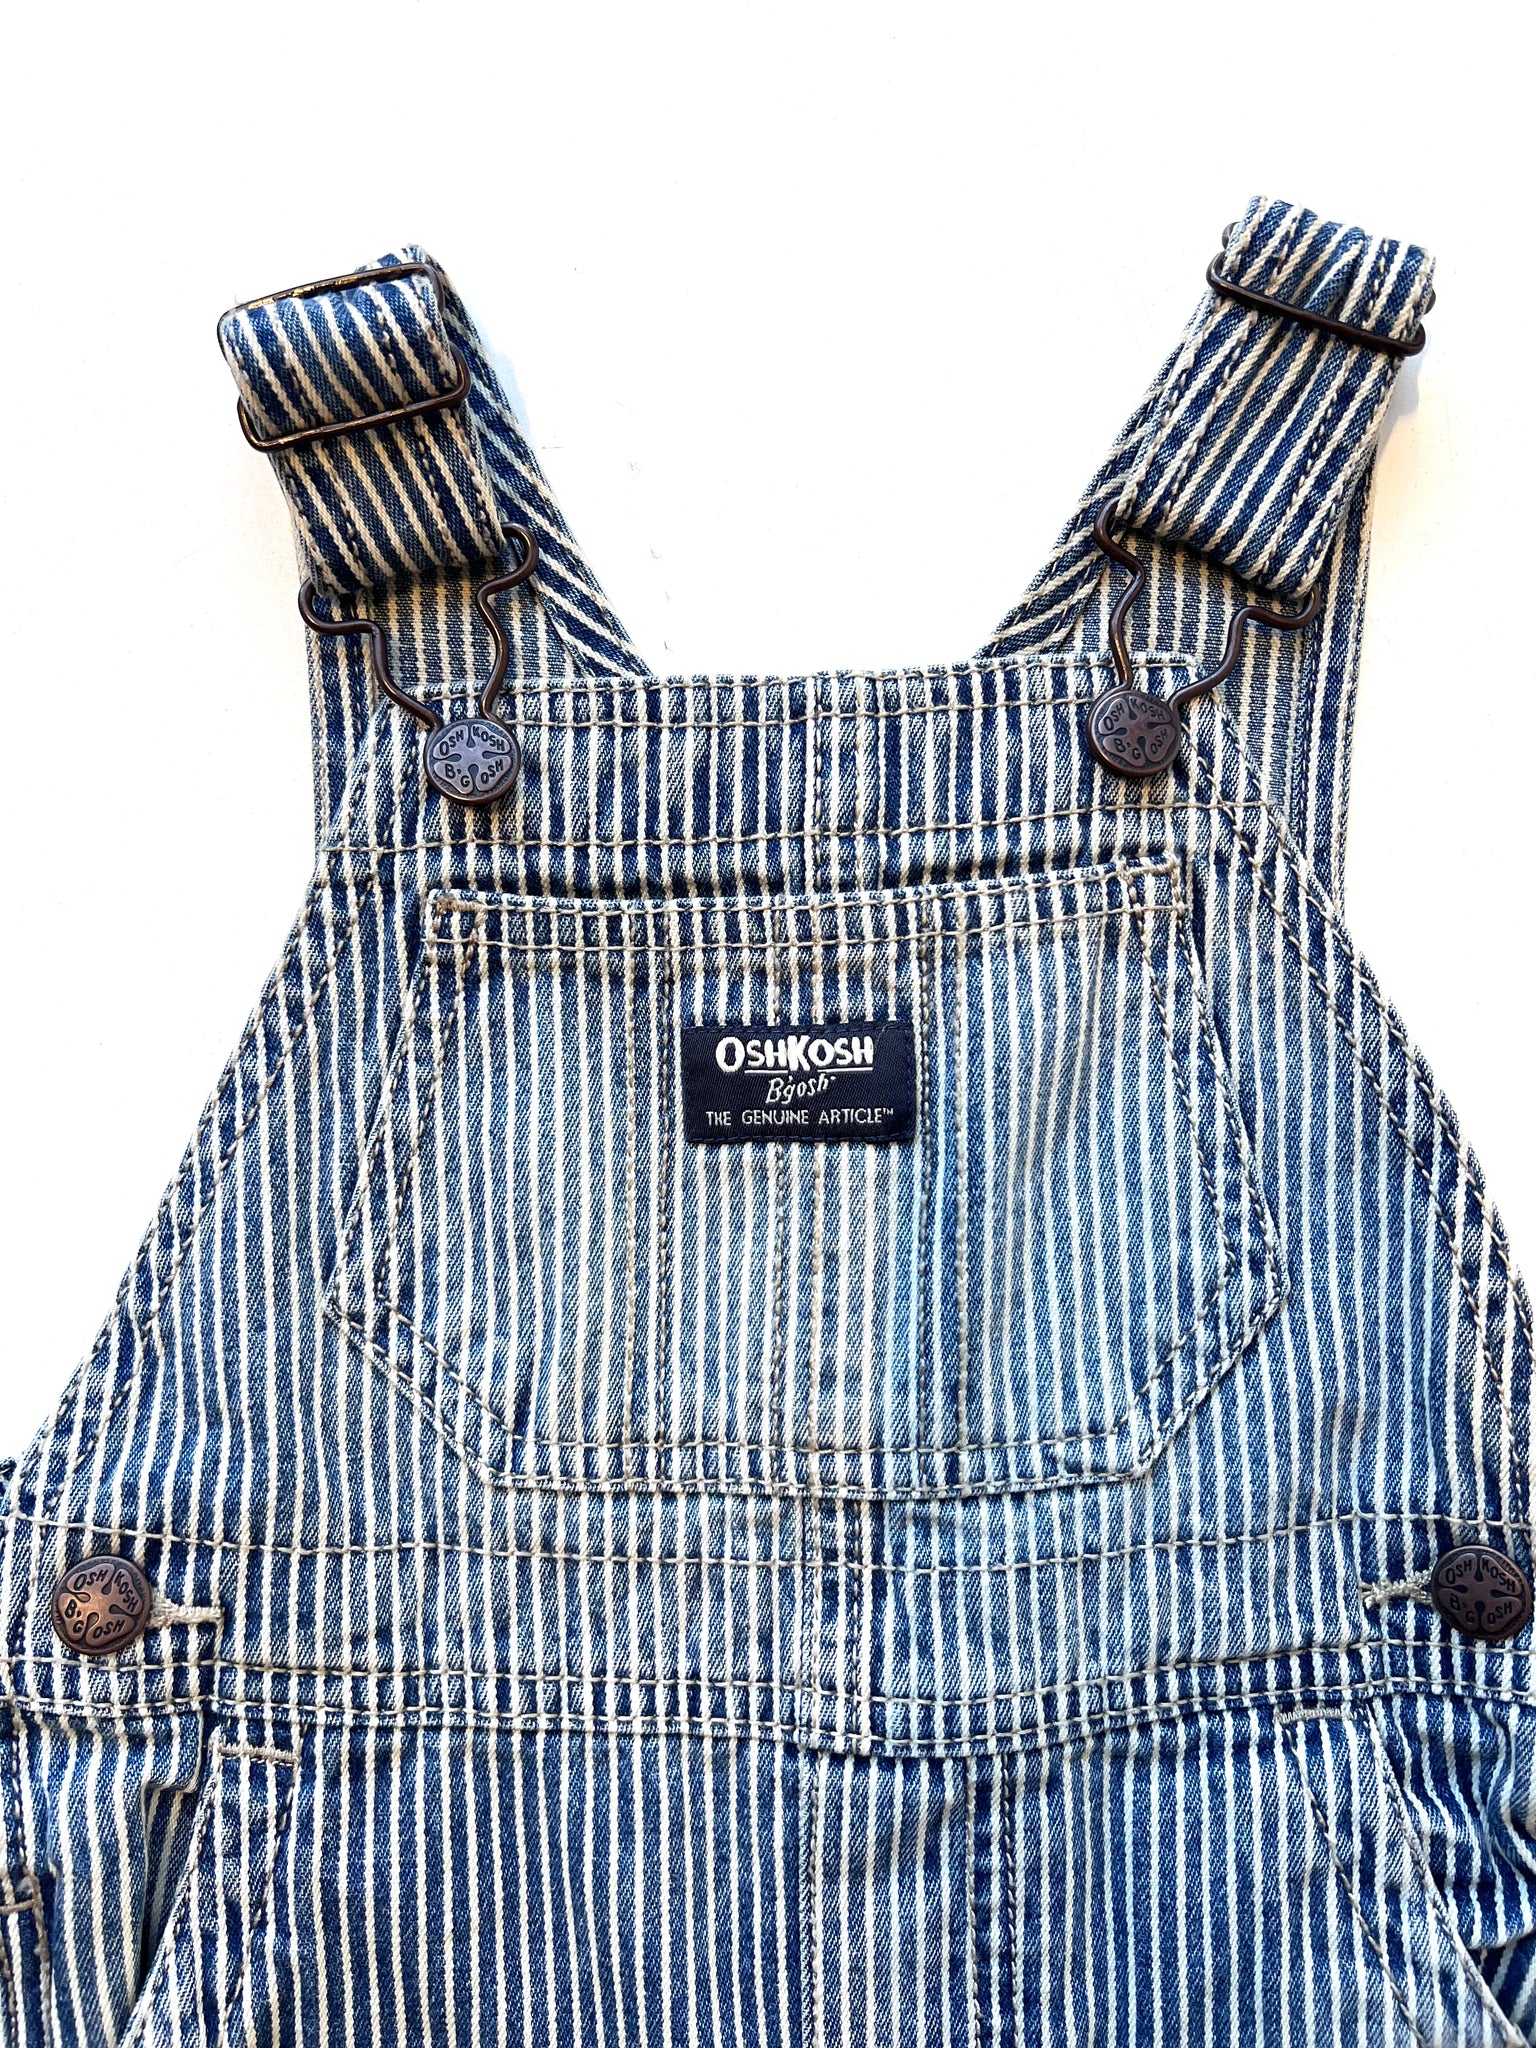 Striped Overalls by Osh Kosh B'Gosh - Infant